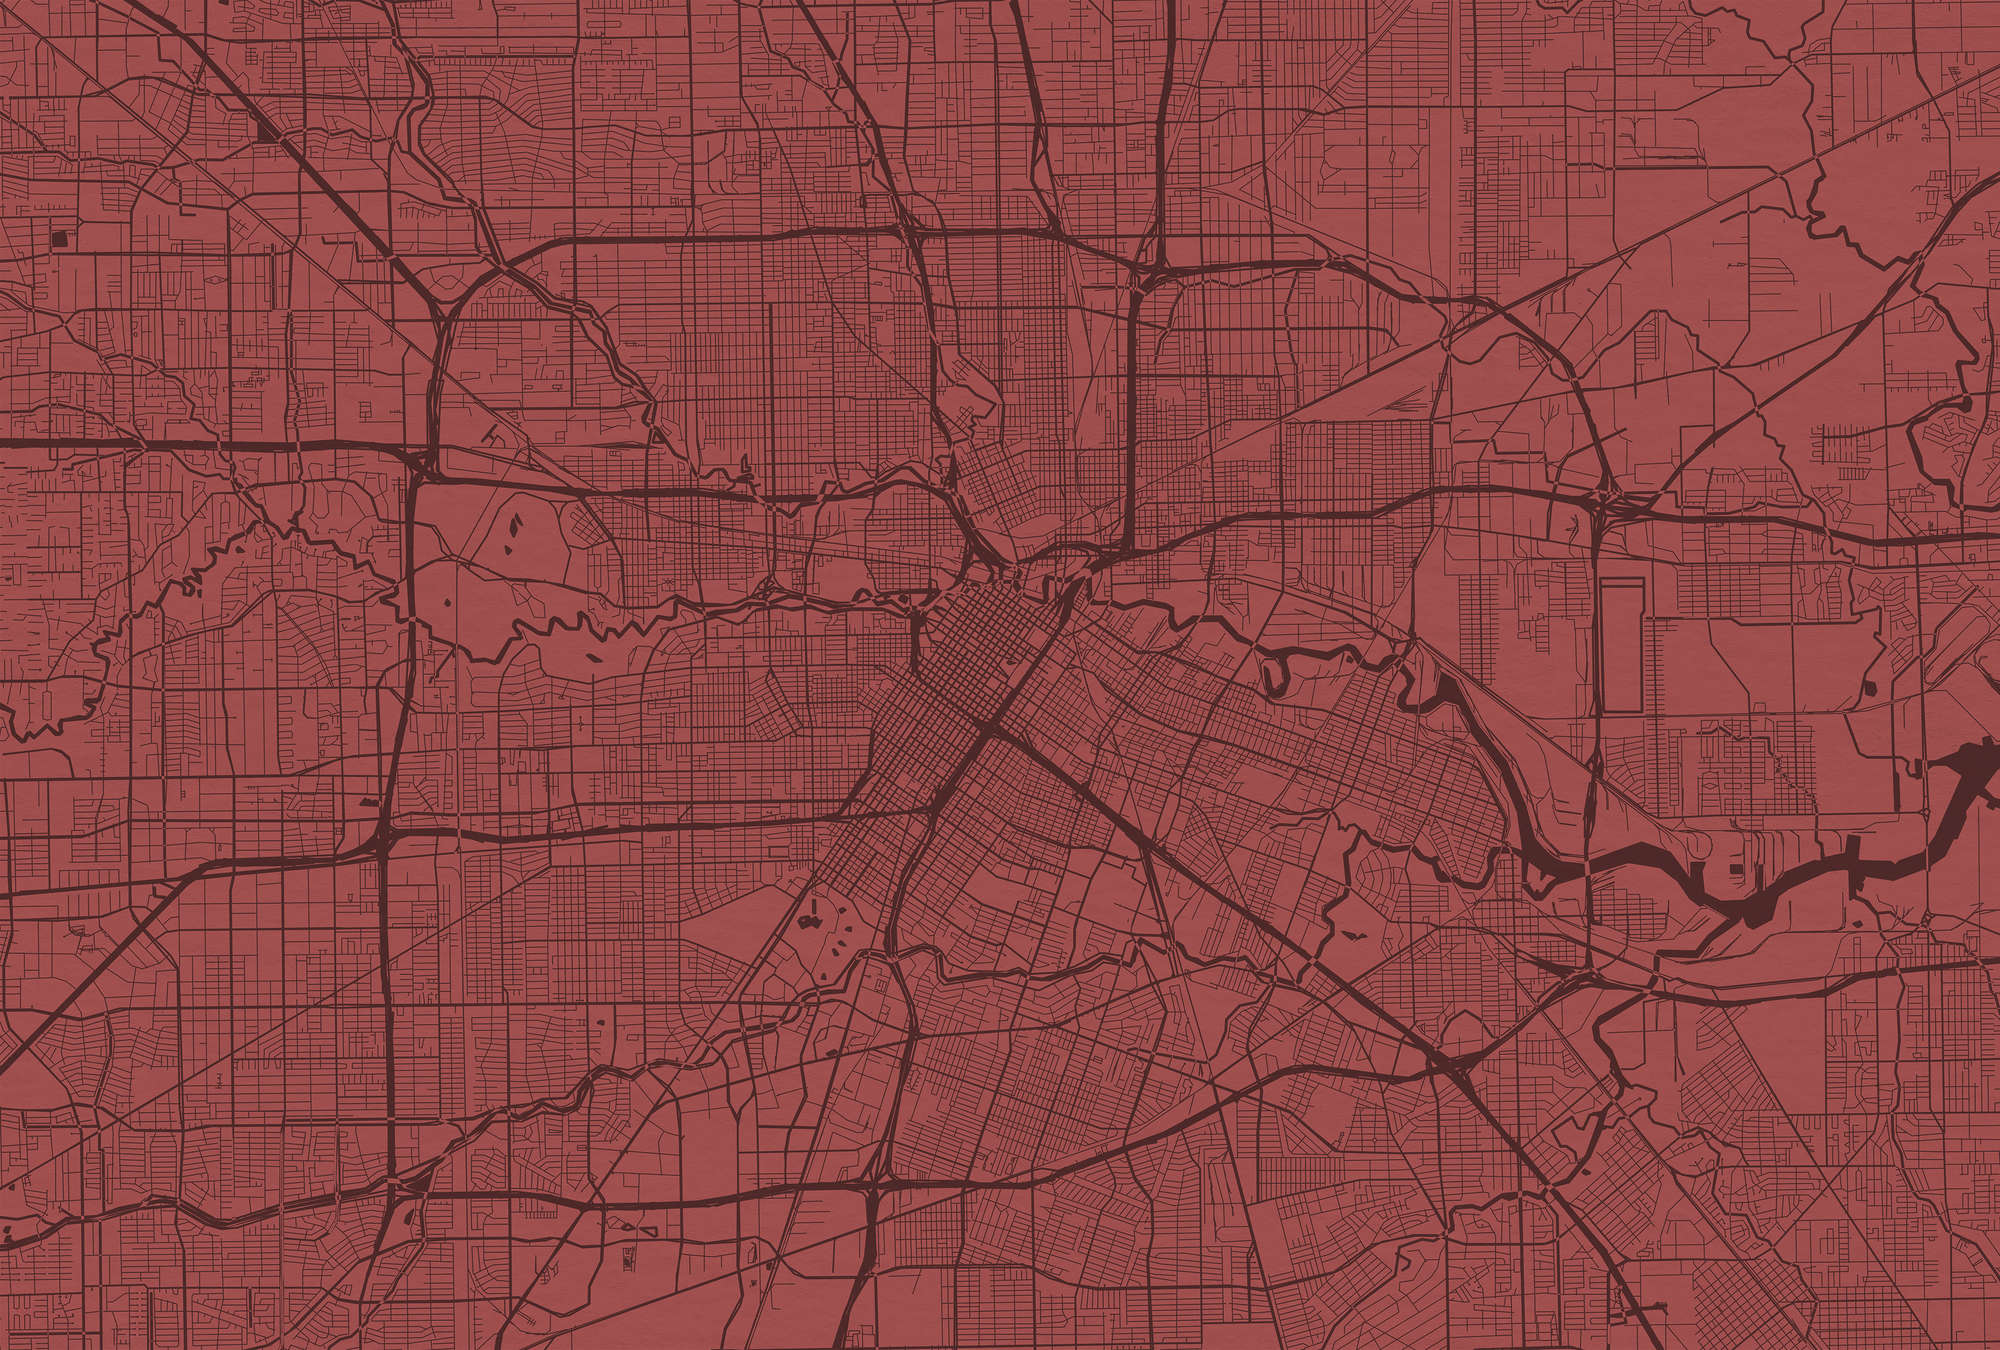             Muurschildering Stadsplattegrond met stratenplan - Rood
        